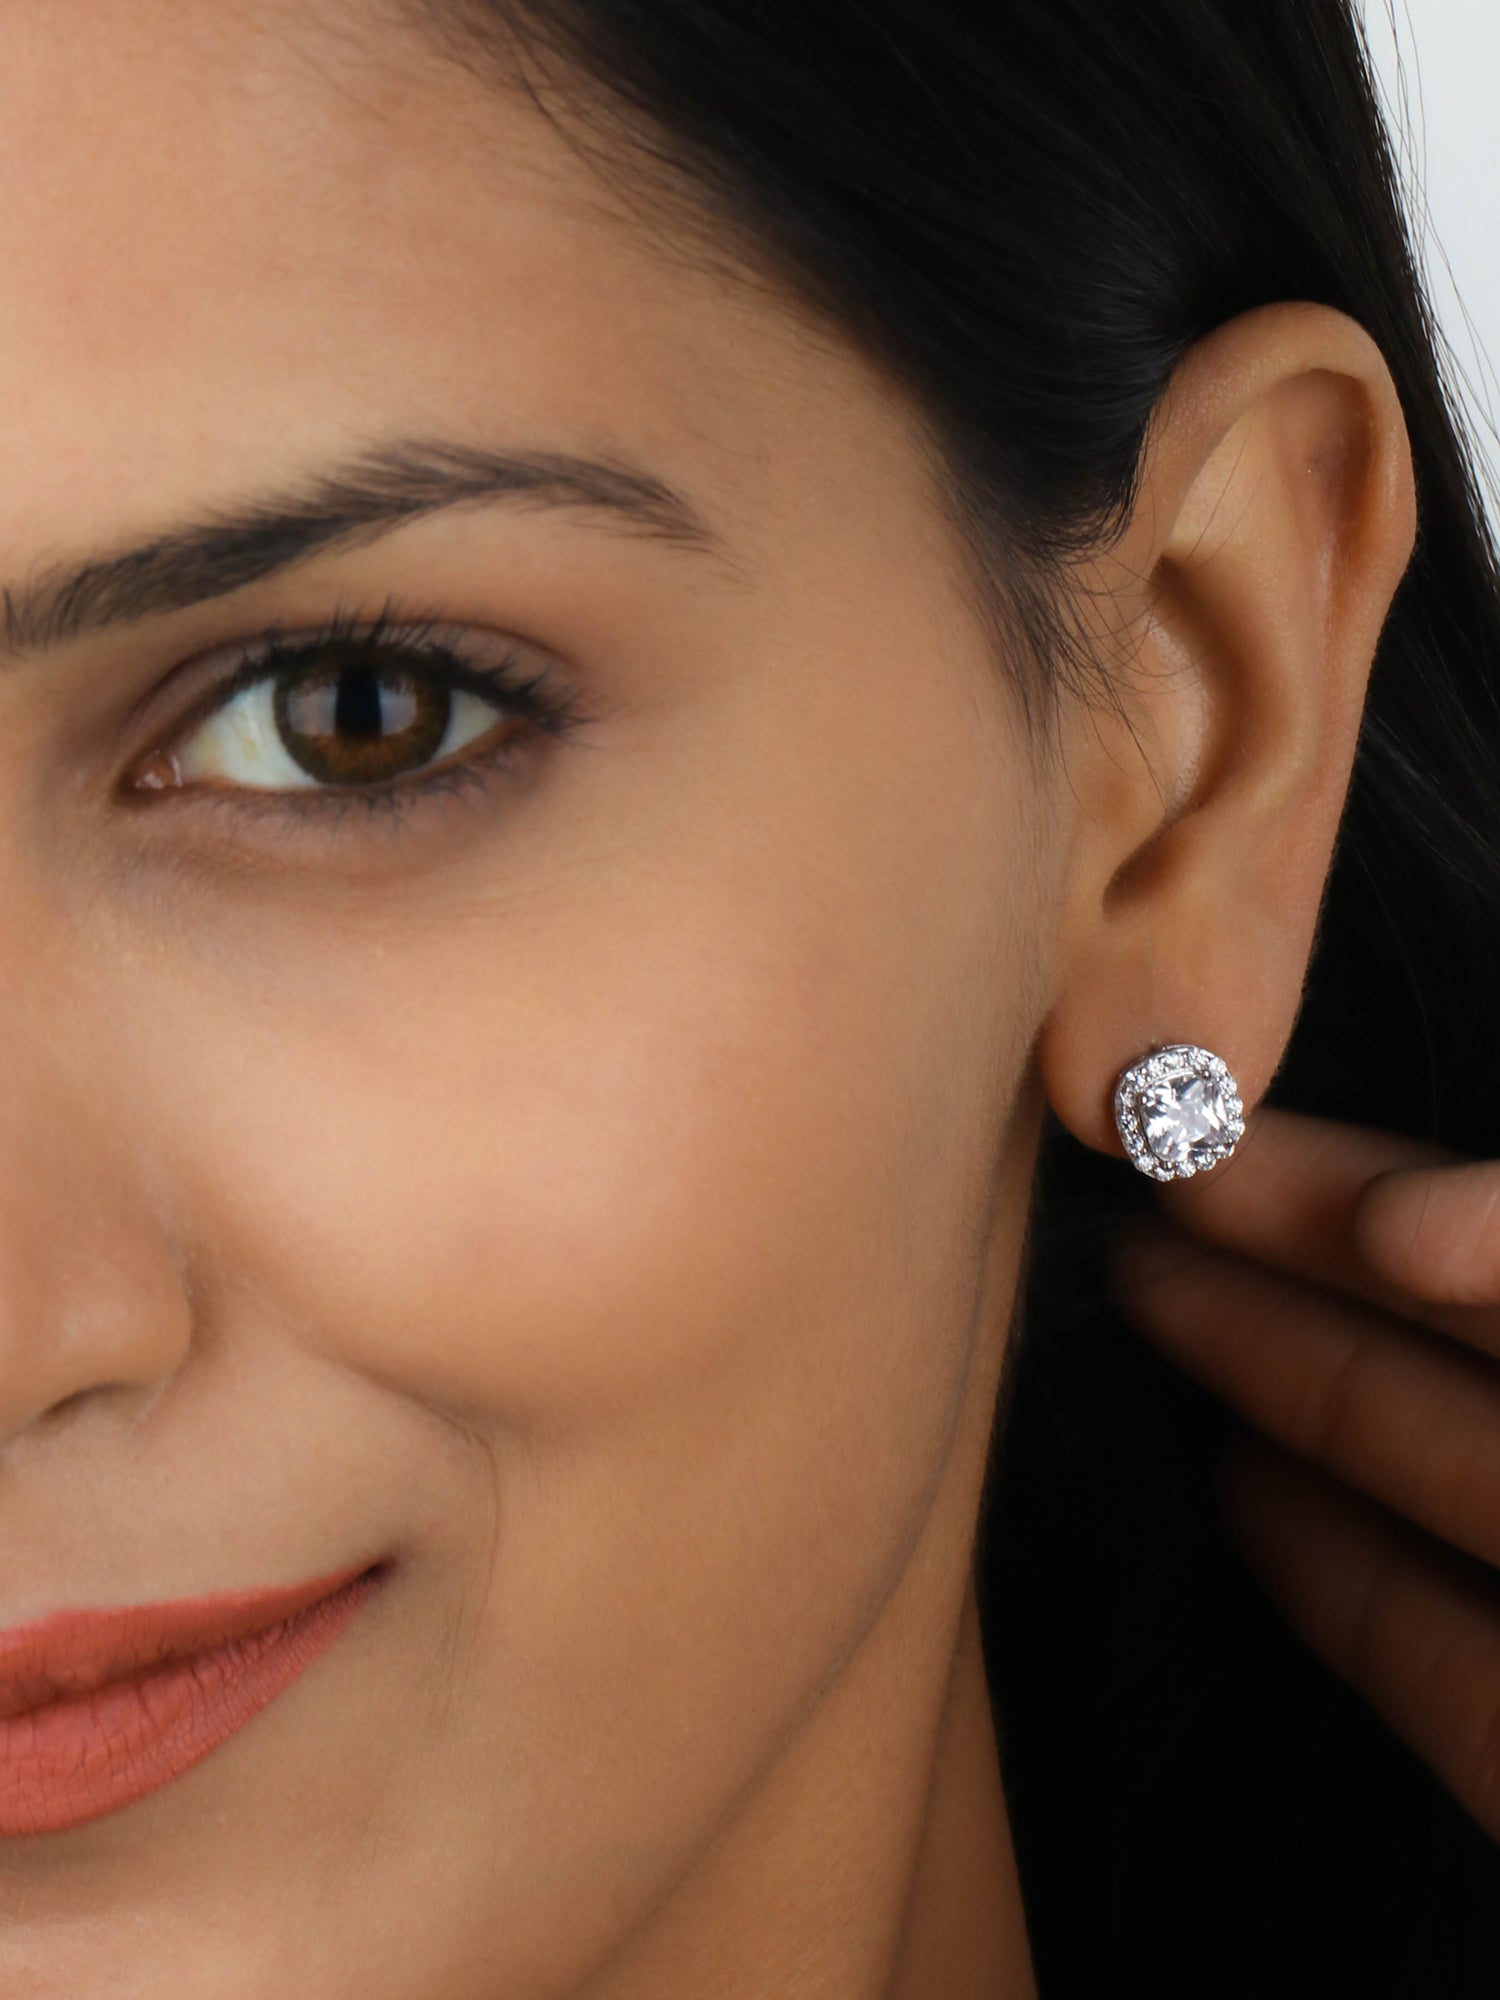 Aggregate more than 72 princess cut diamond stud earrings